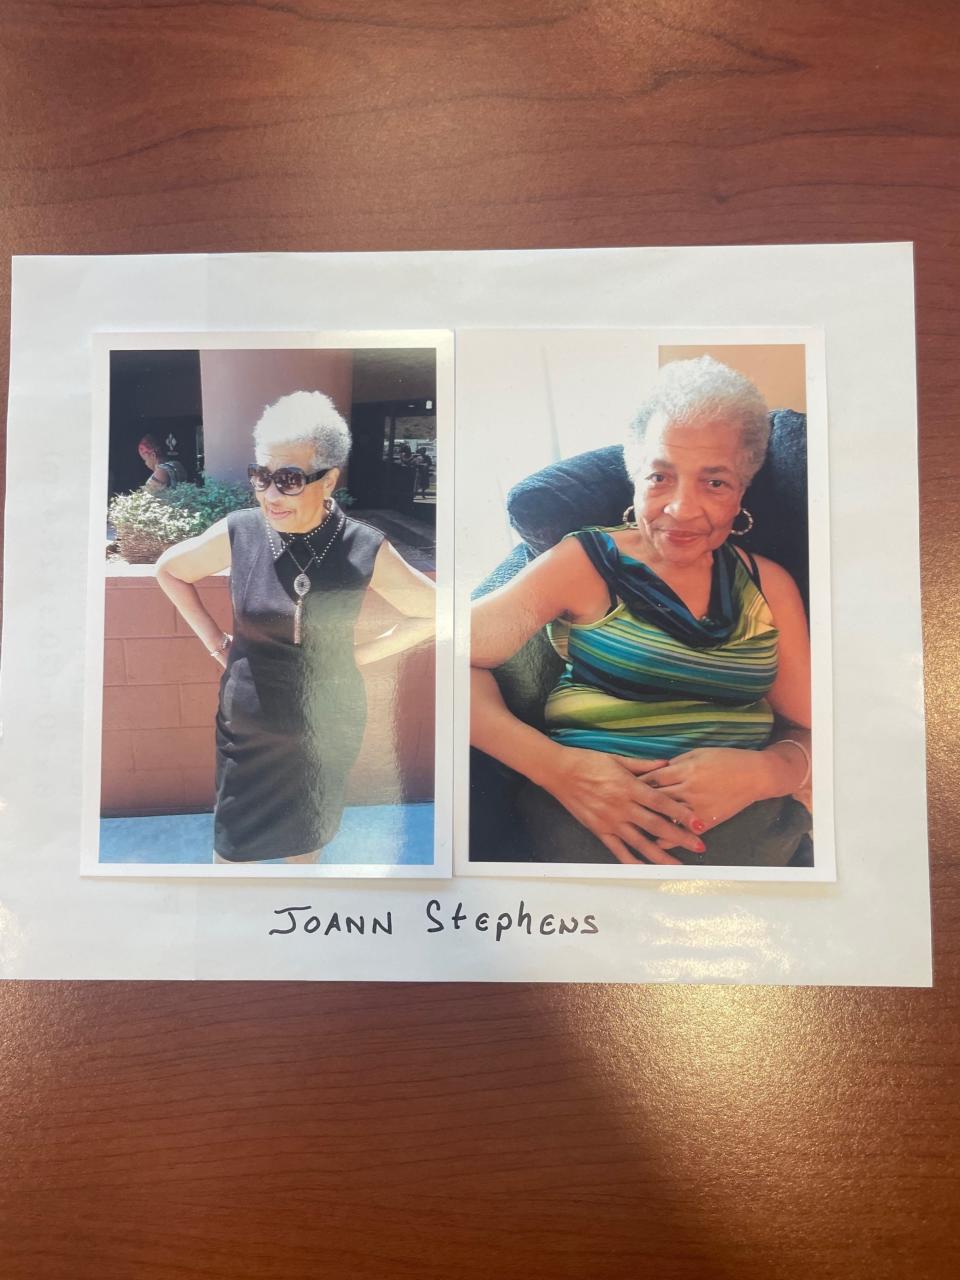 Photo of Joann Stephens, who died in November of 2022.